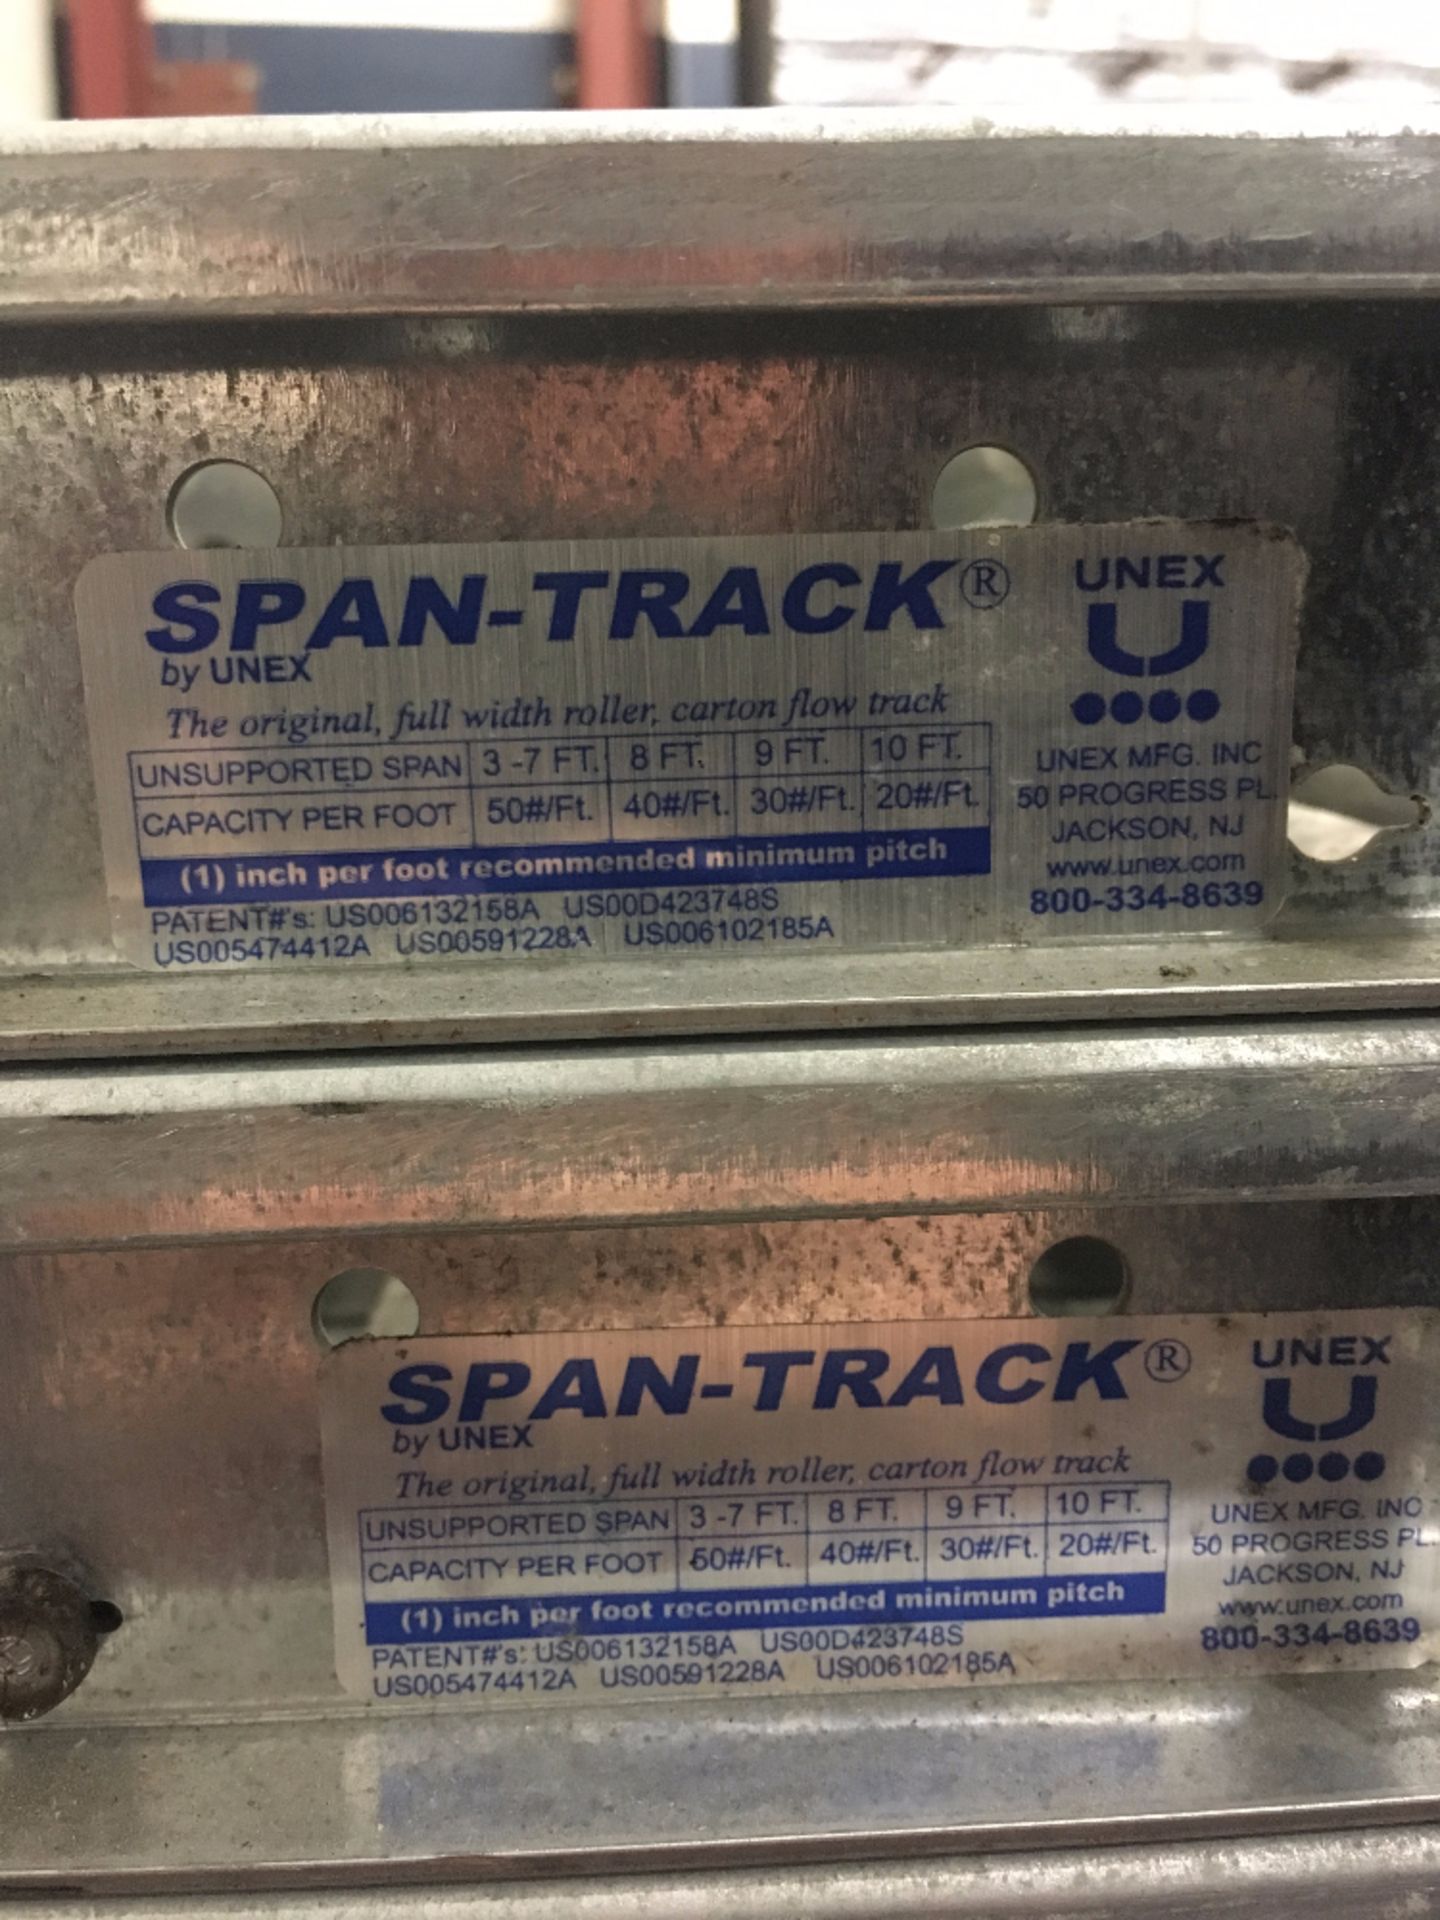 (63) UNEX Span-Track 36" x 9.5" Conveyors - Image 2 of 2